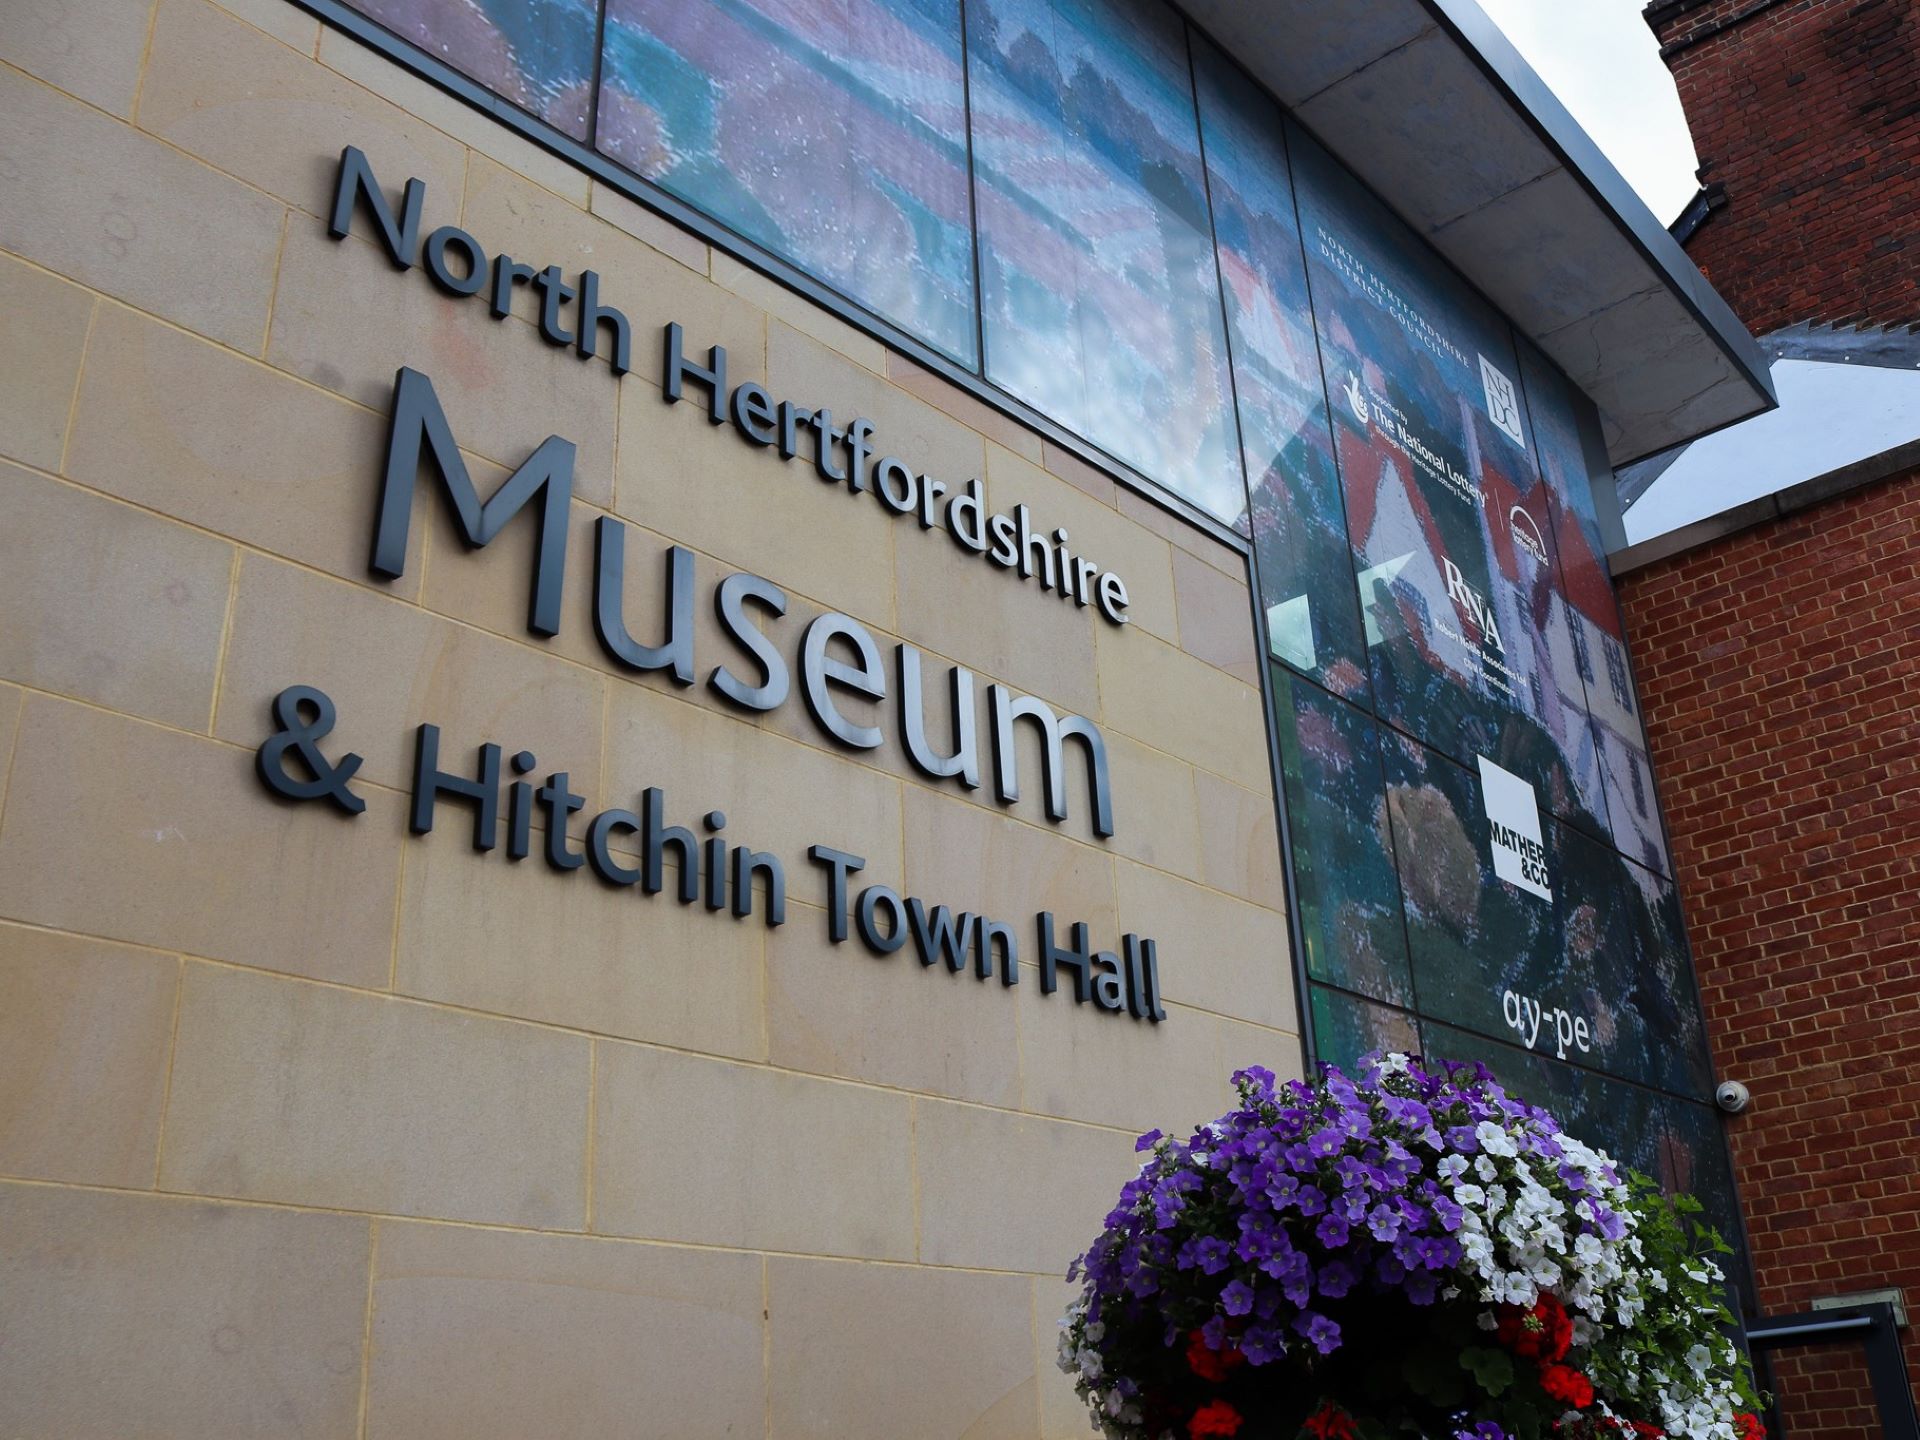 North Herts museum